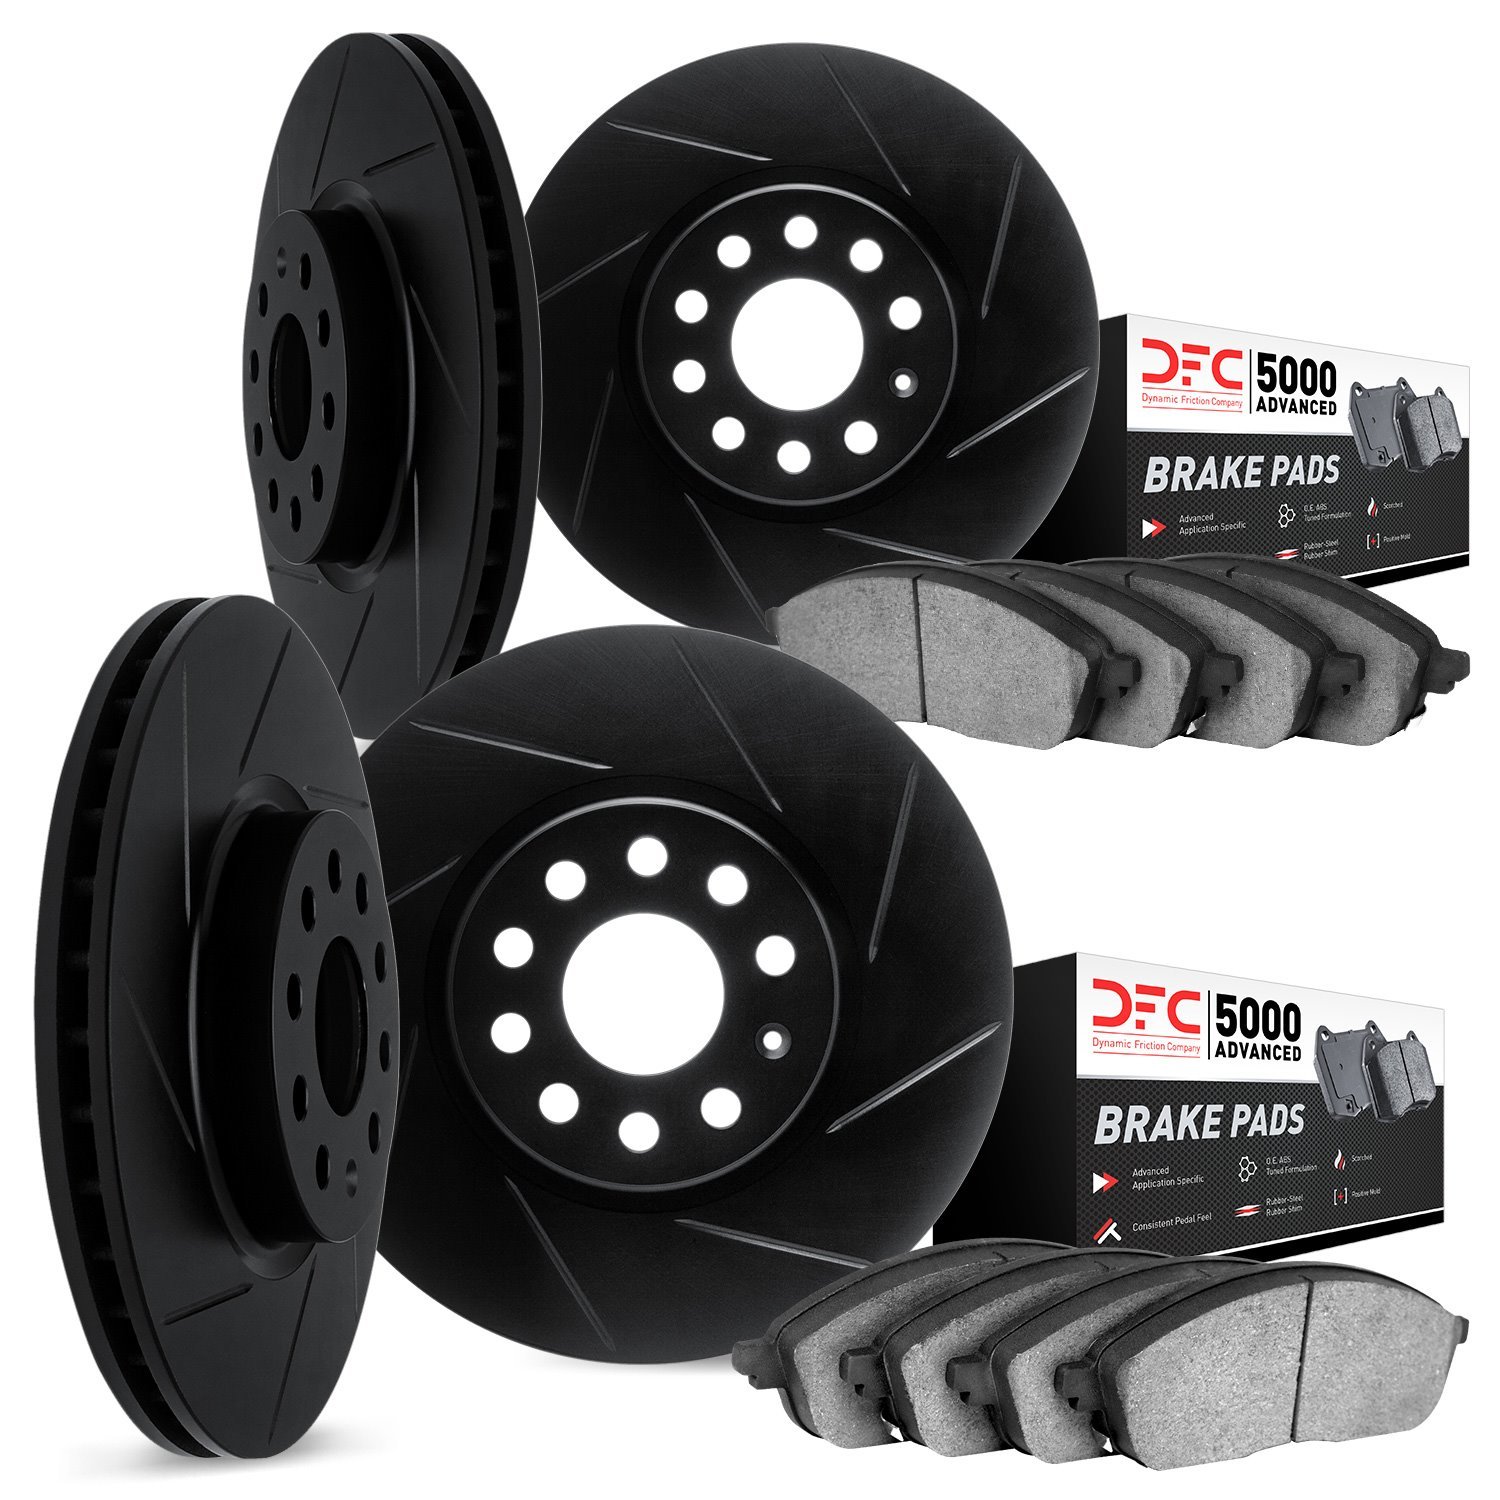 3514-42022 Slotted Brake Rotors w/5000 Advanced Brake Pads Kit & Hardware [Black], Fits Select Mopar, Position: Front and Rear